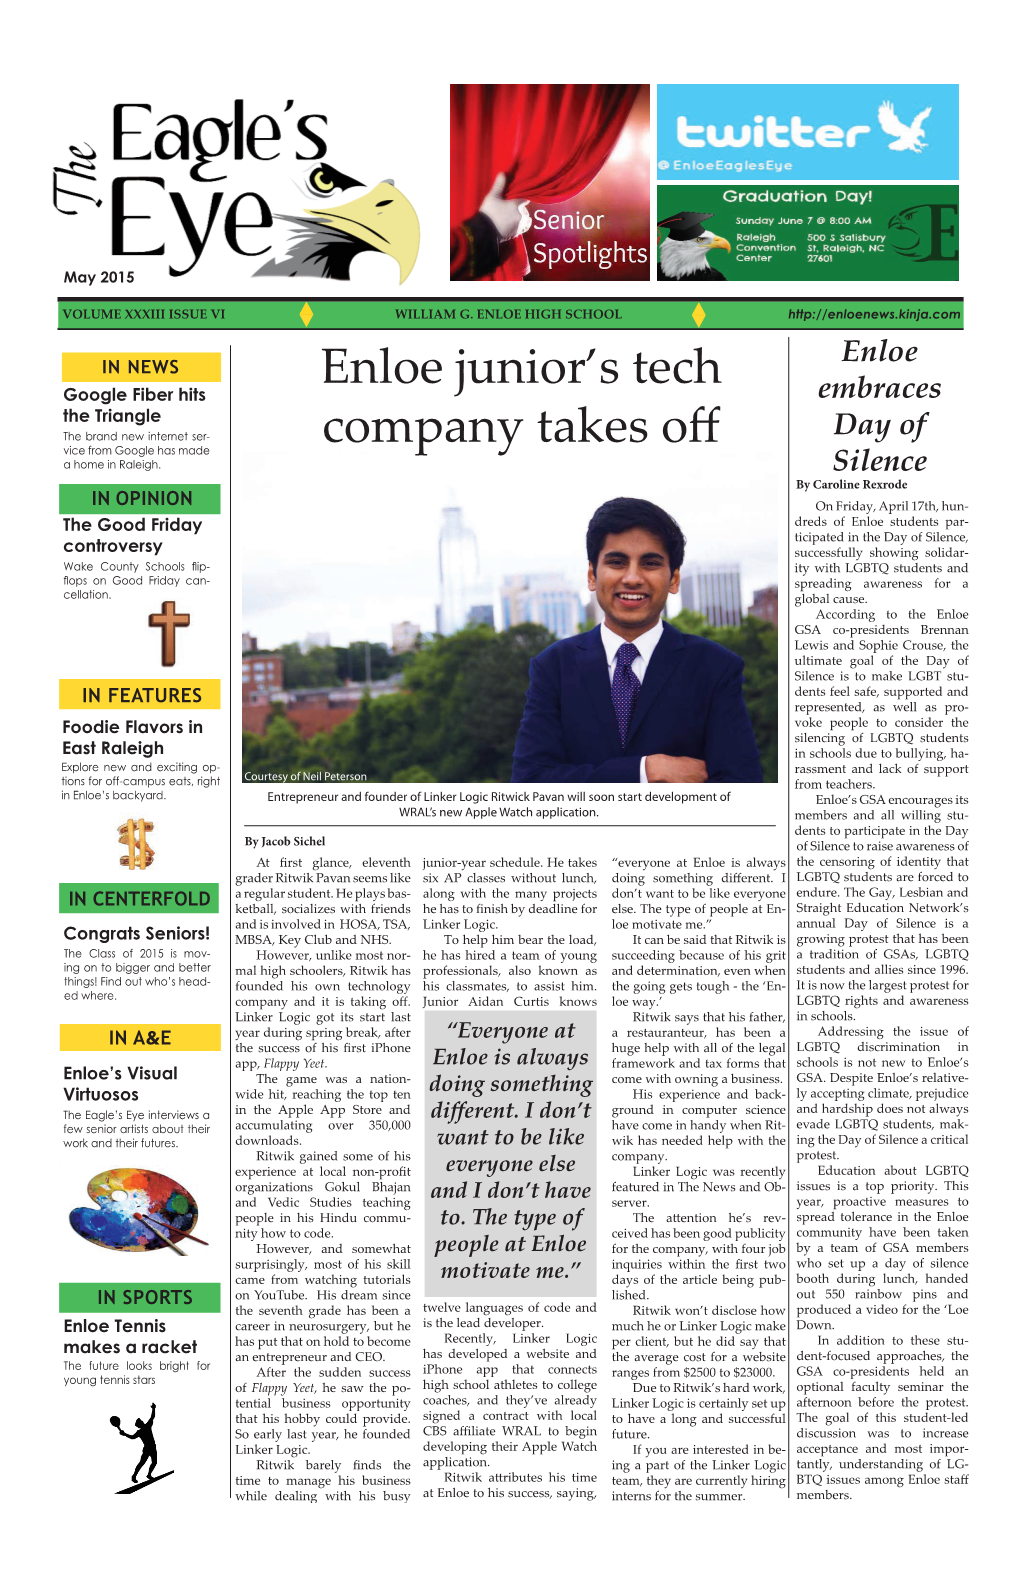 Enloe Junior's Tech Company Takes